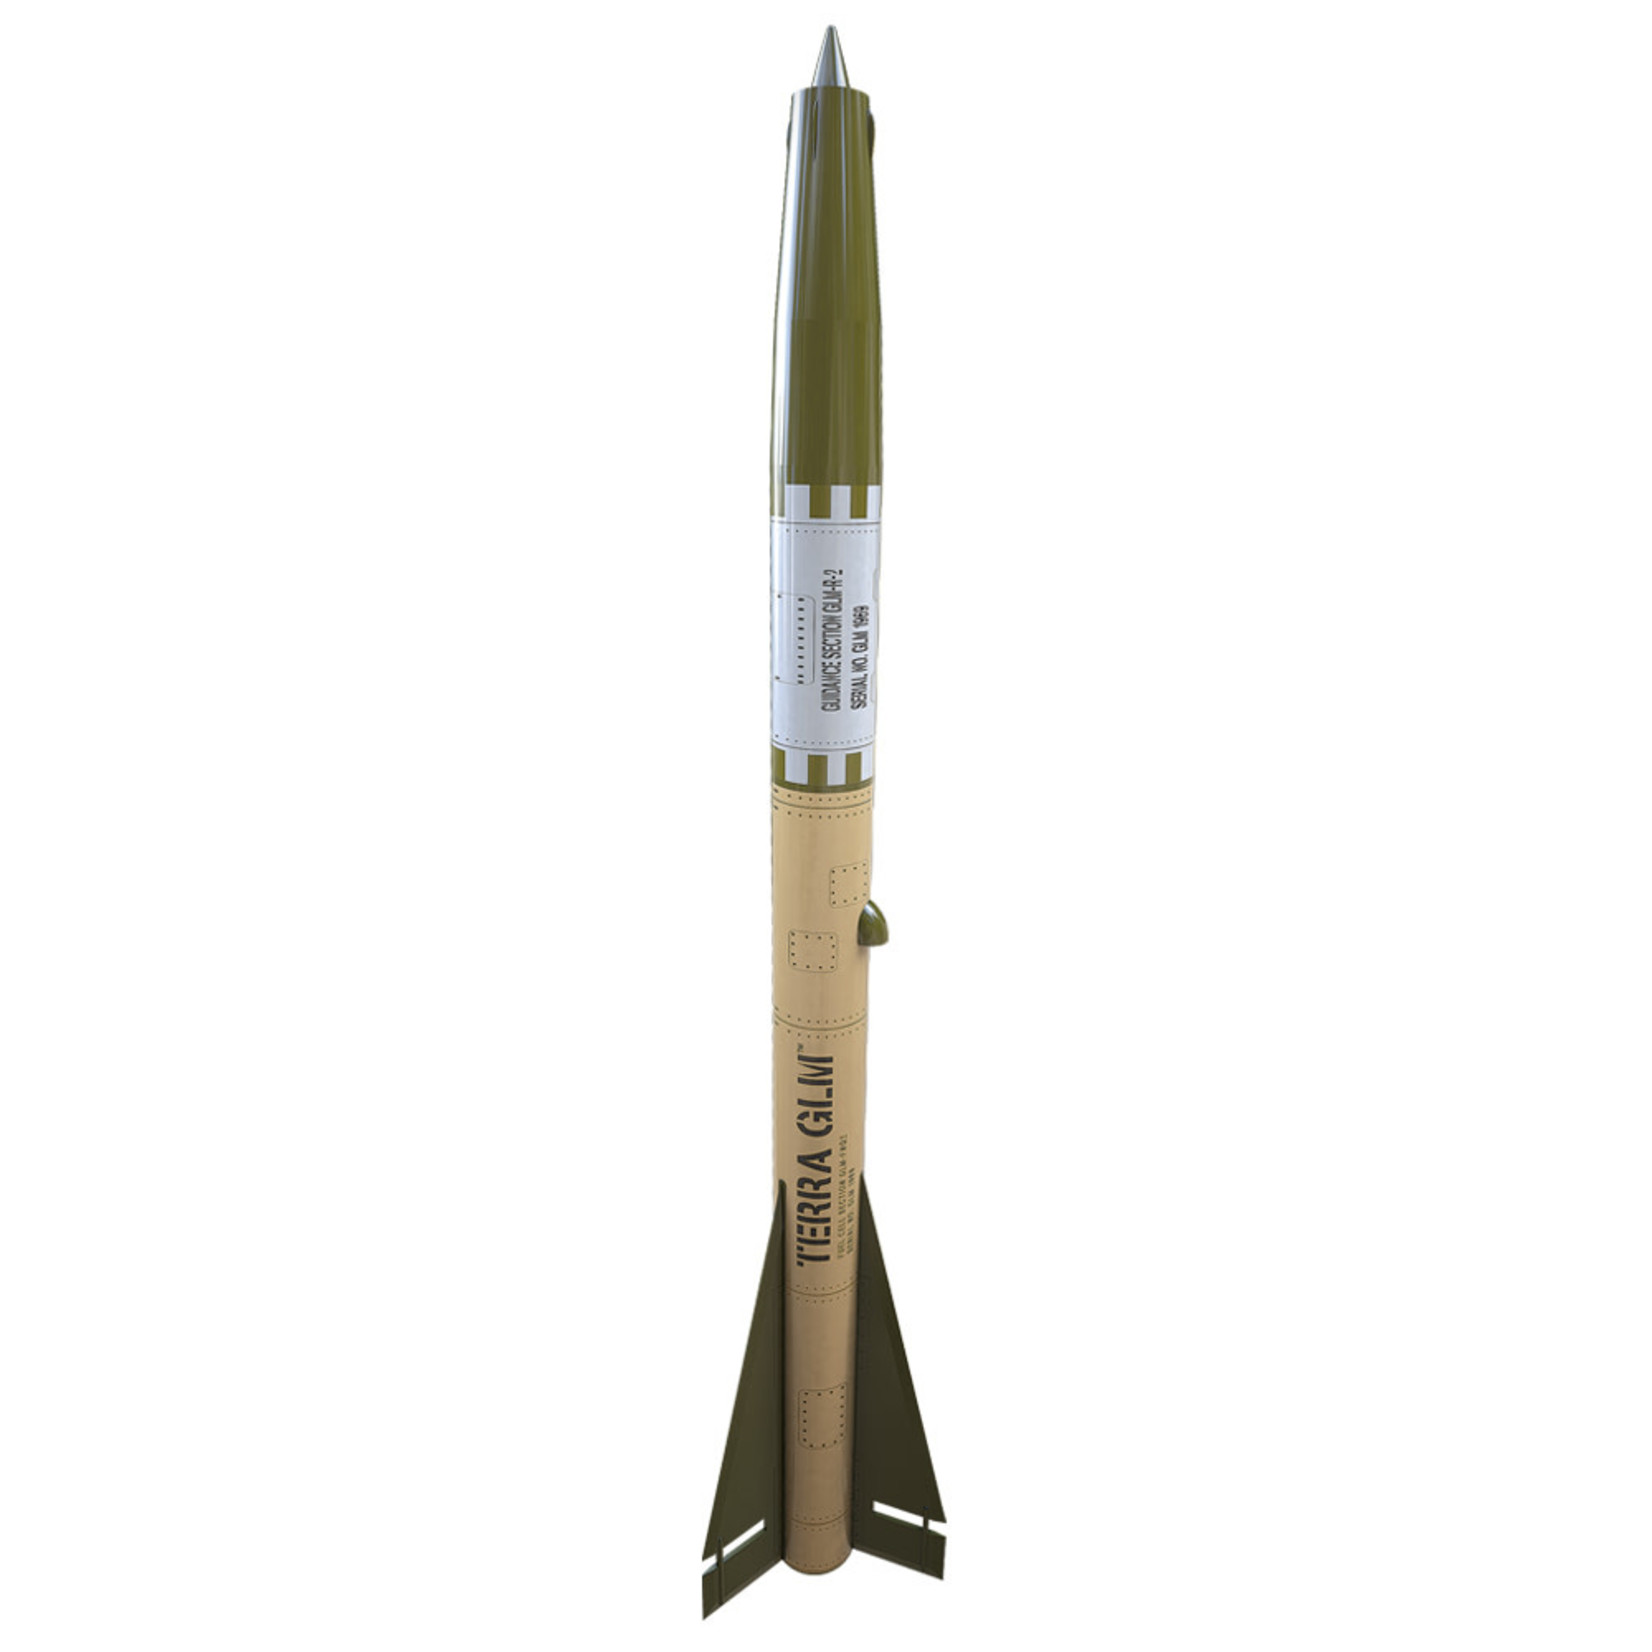 EST Terra GLM Beginner rocket kit